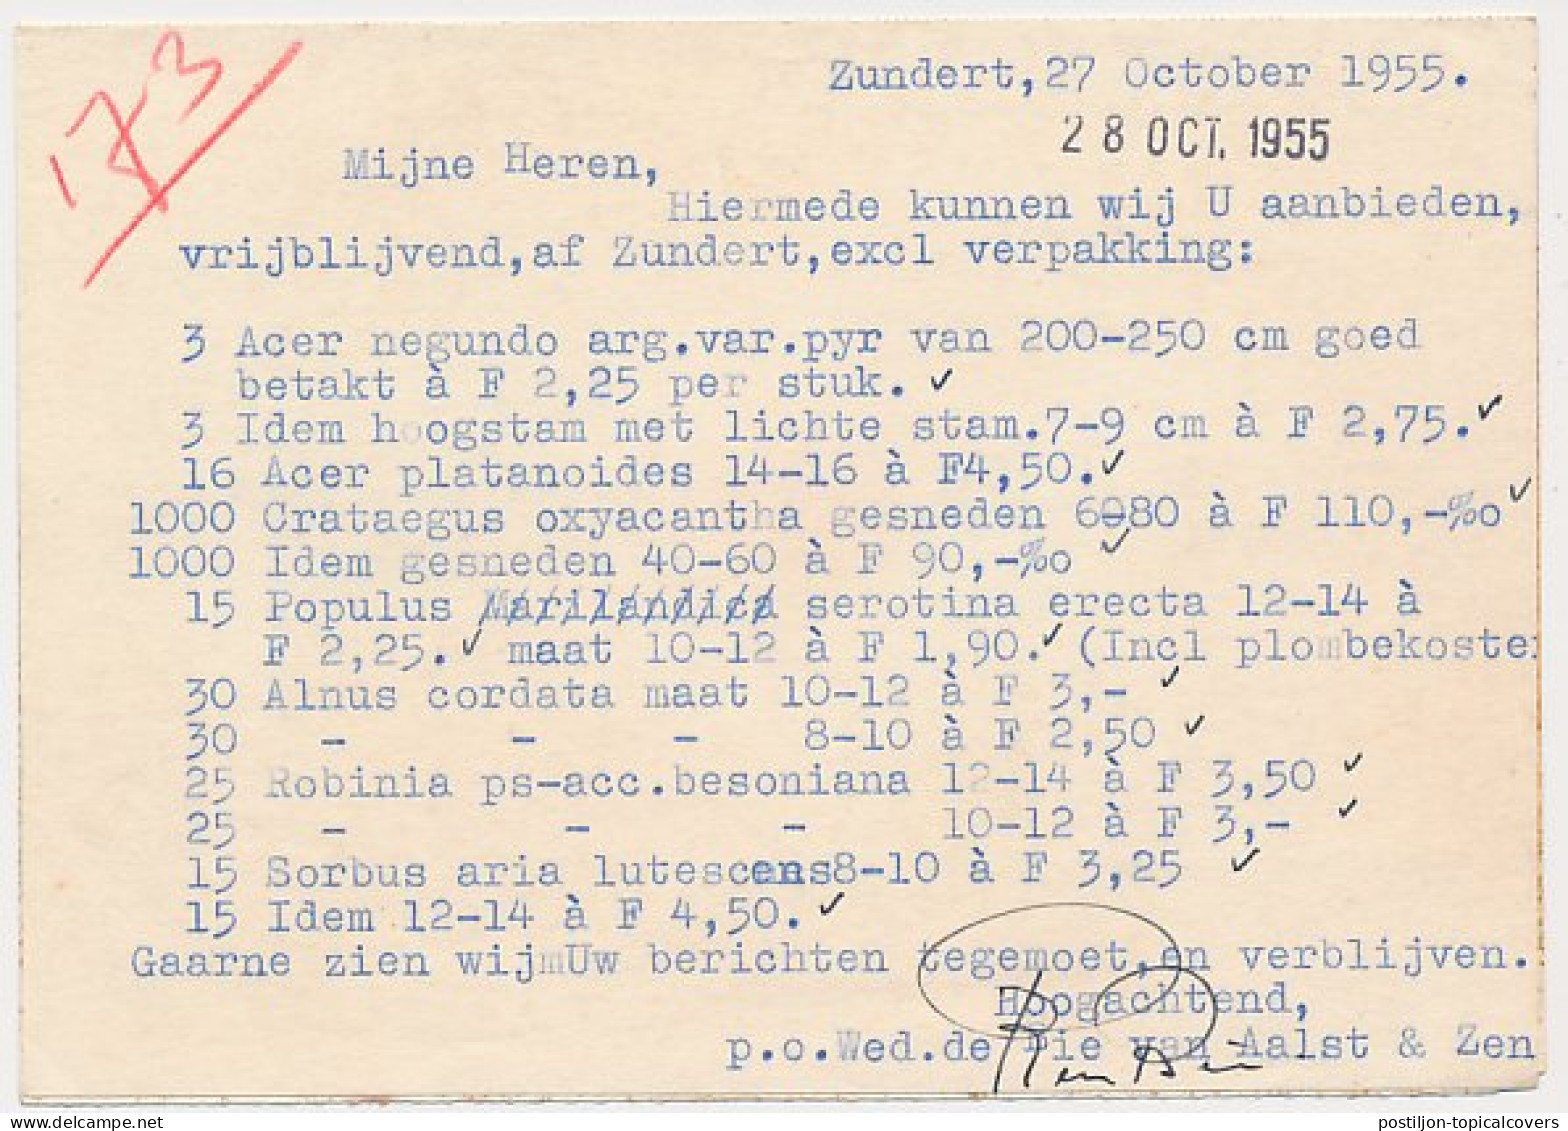 Firma Briefkaart Zundert 1955 - Boomkweekerijen - Unclassified